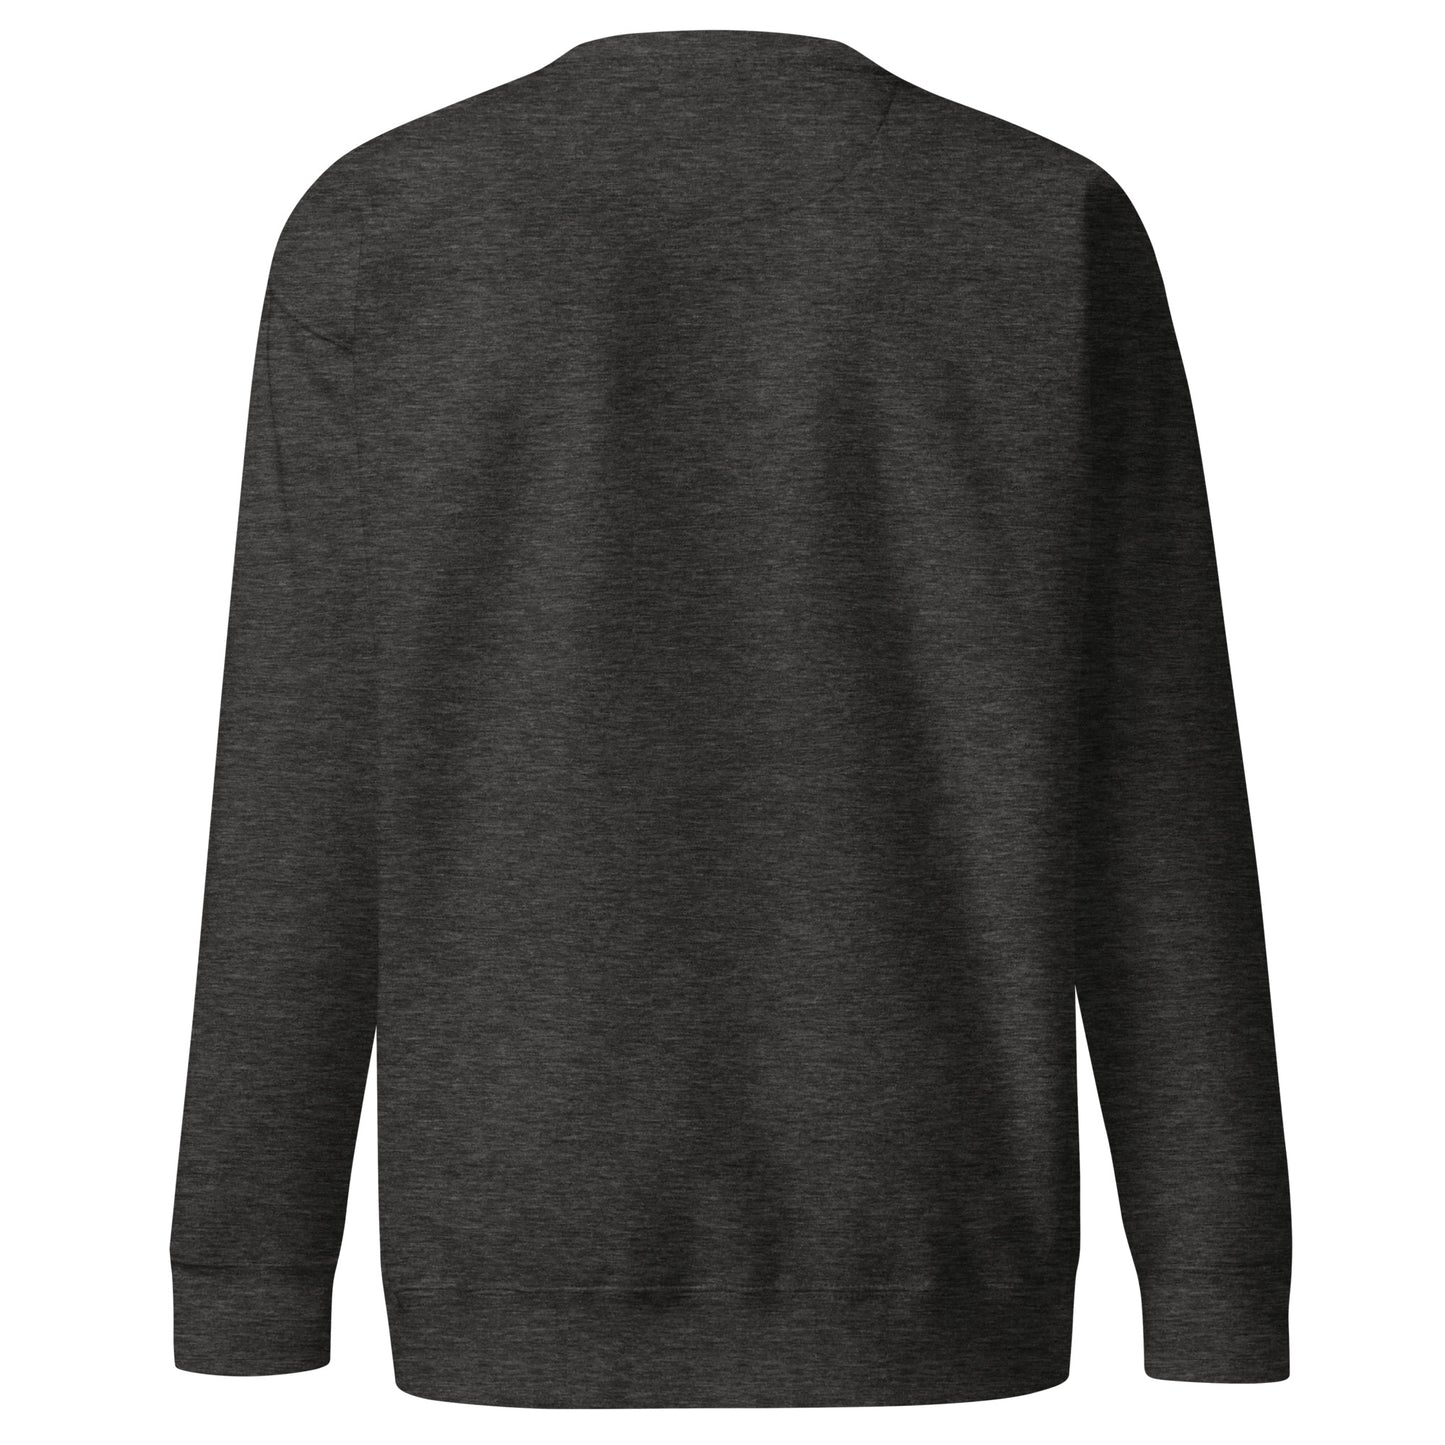 back sweatshirt Logo dark gray by B.Different Clothing independent streetwear brand inspired by street art graffiti